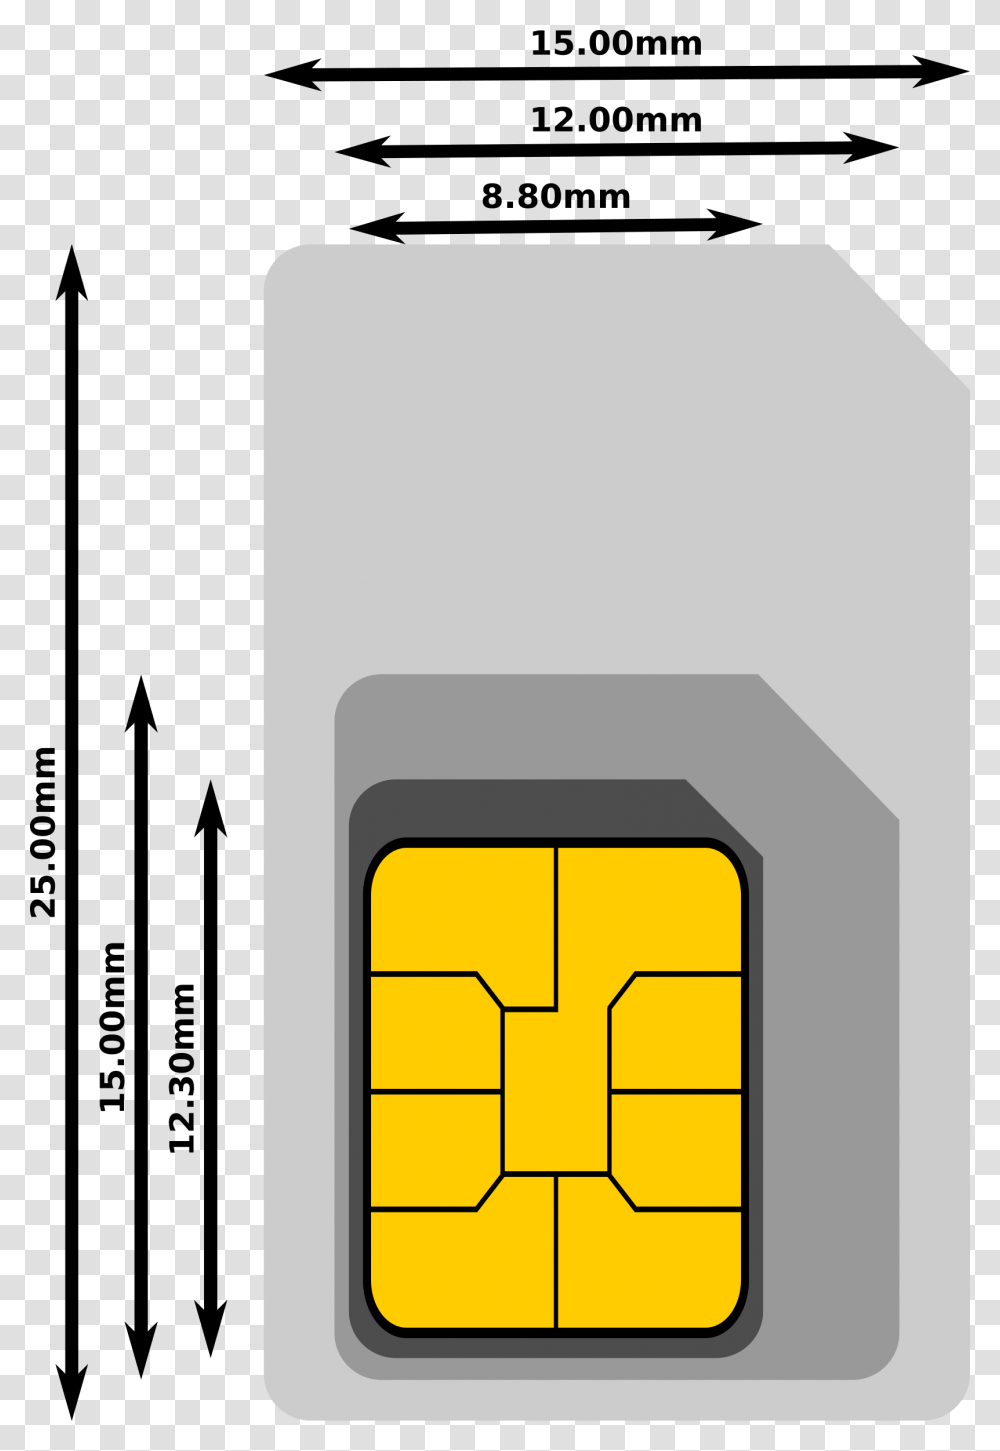 Cellular Sim Card Estimated Dimensions Dimensions Of A Sim Card, Electronics, Phone, Screen Transparent Png